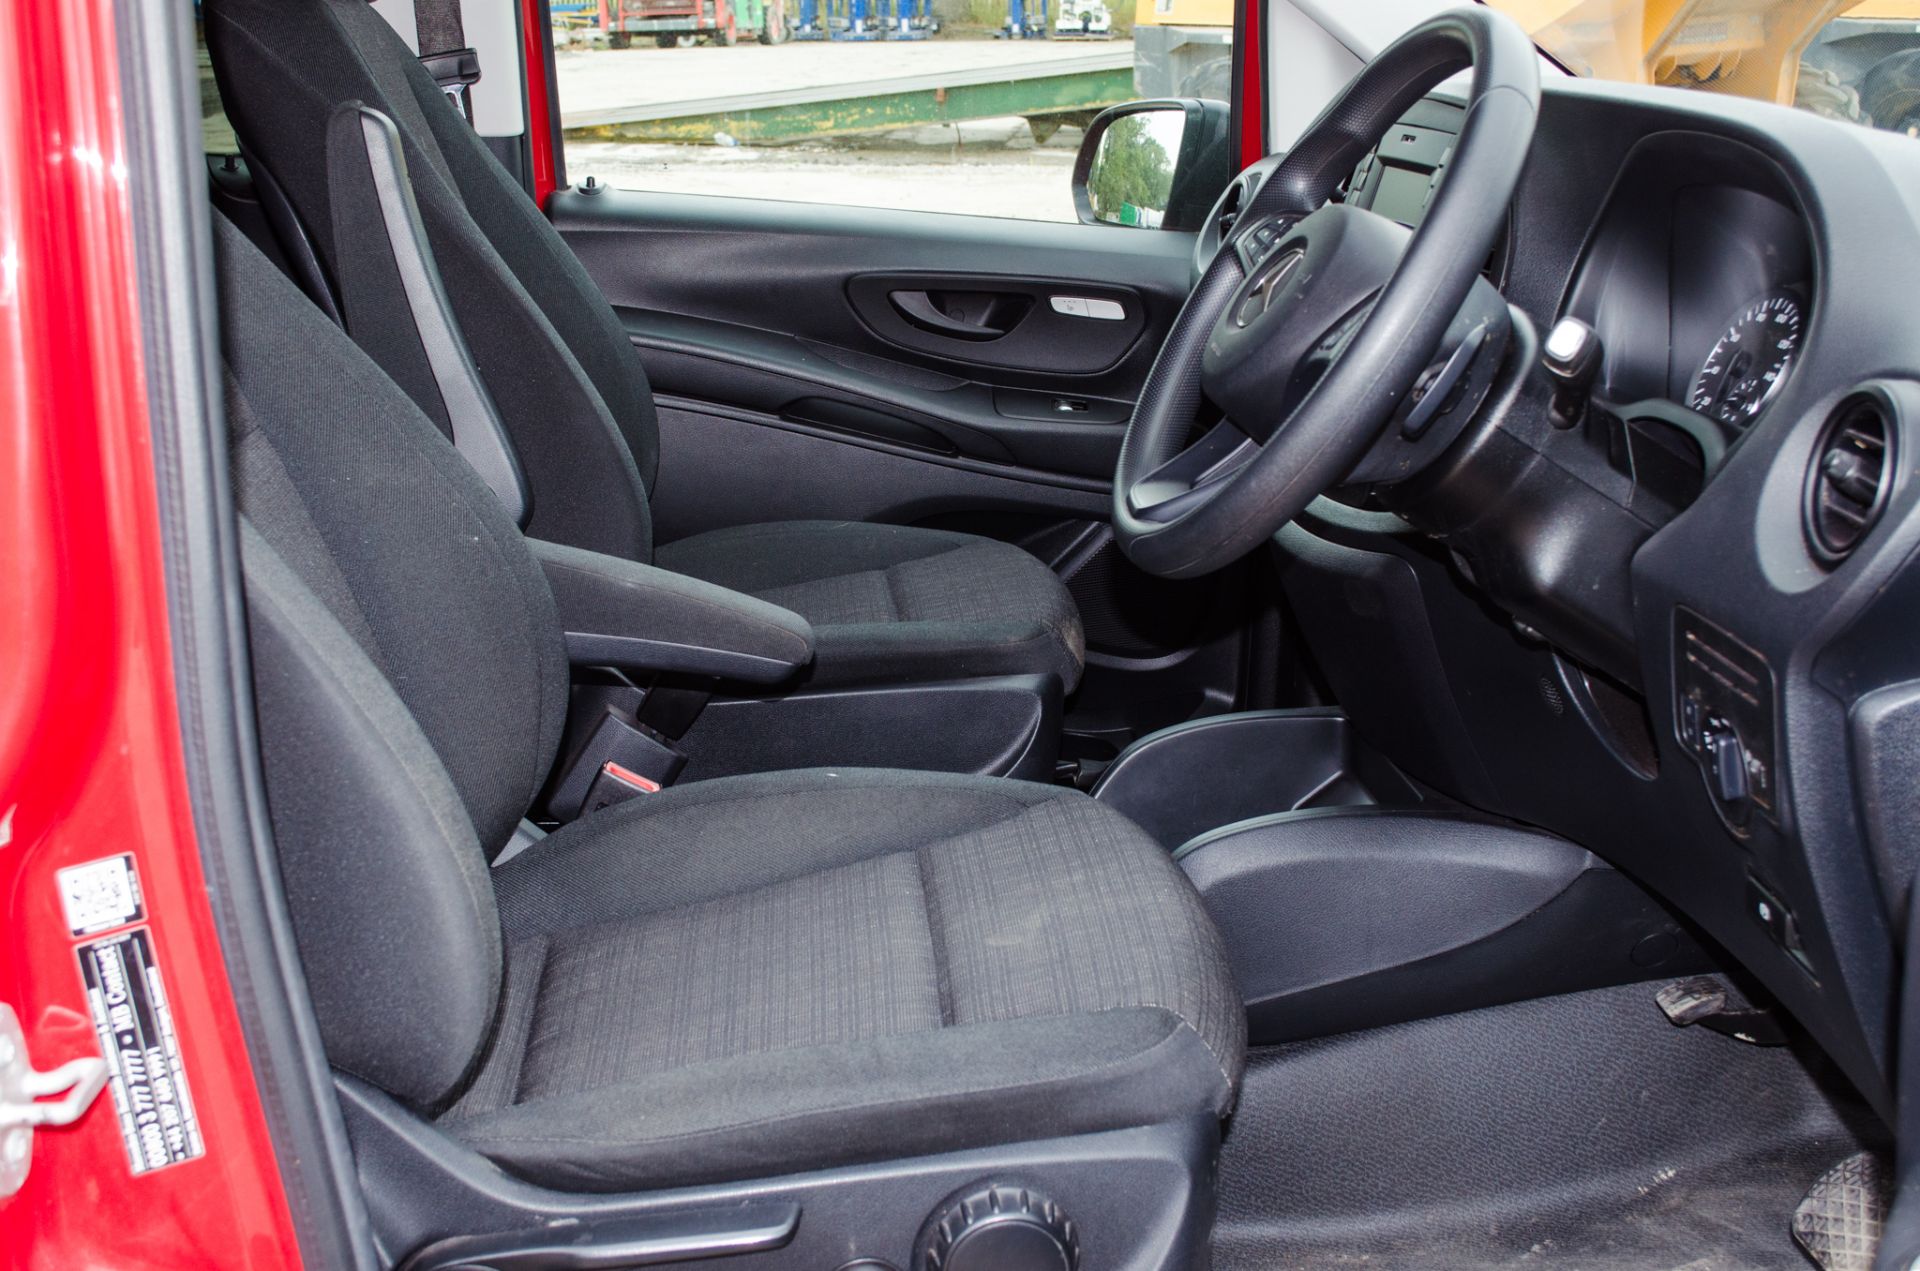 Mercedes Benz Vito 116 Sport Bluetech auto 5 seat crew cab panel van Registration Number: BU68 MUB - Image 18 of 32